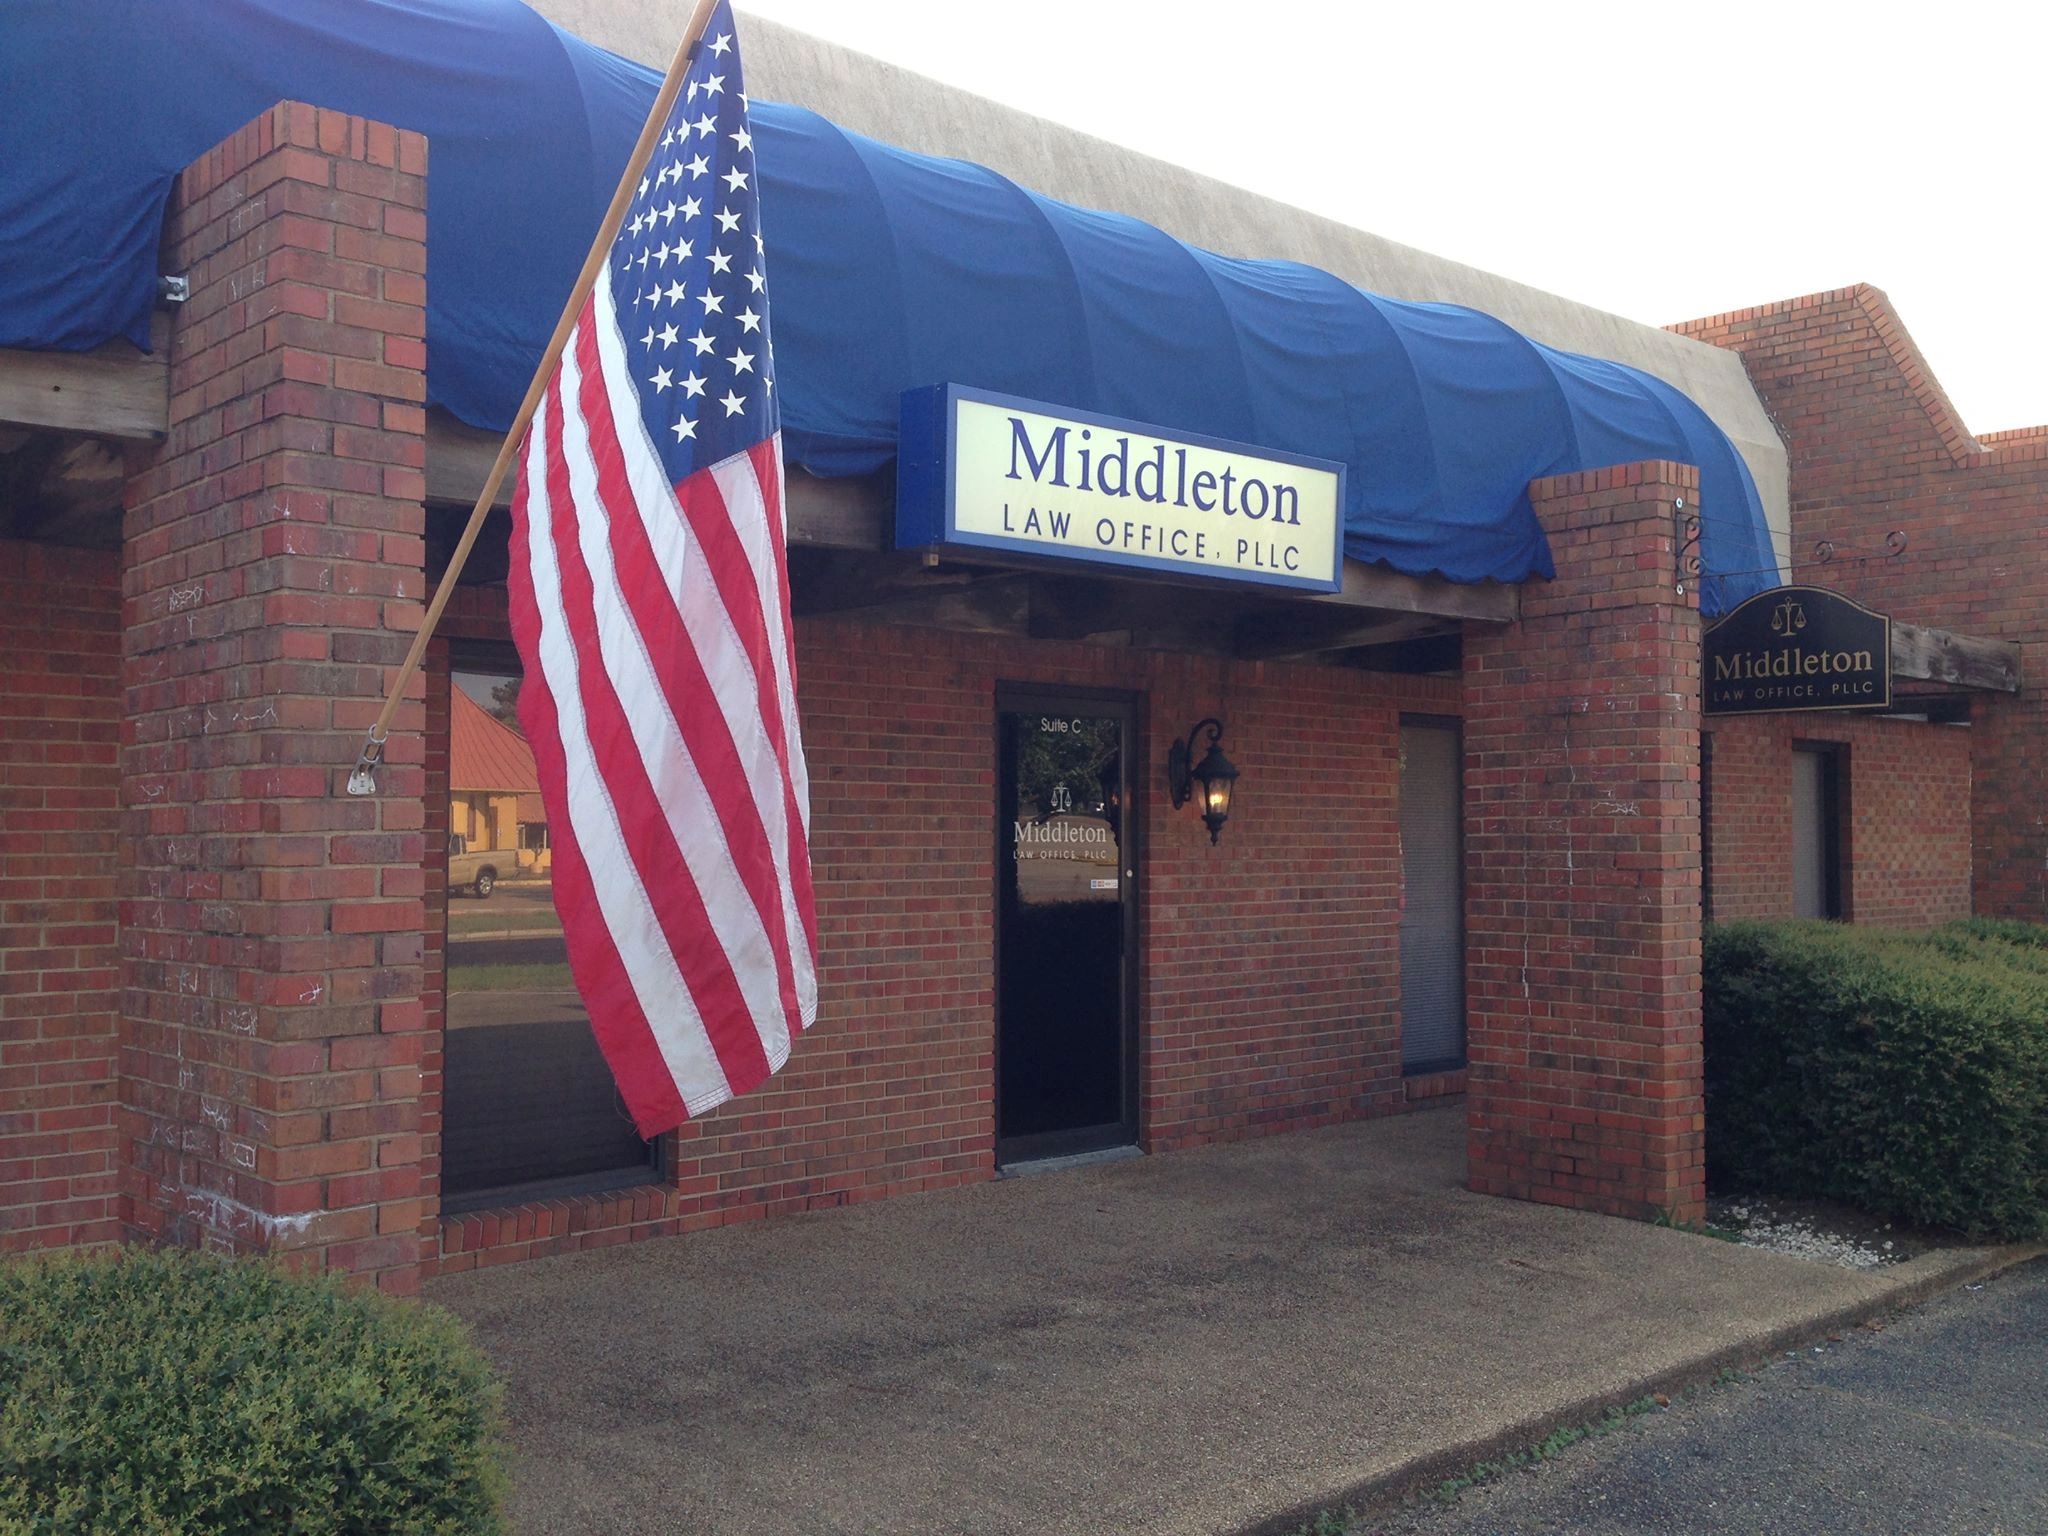 Middleton Law Office PLLC